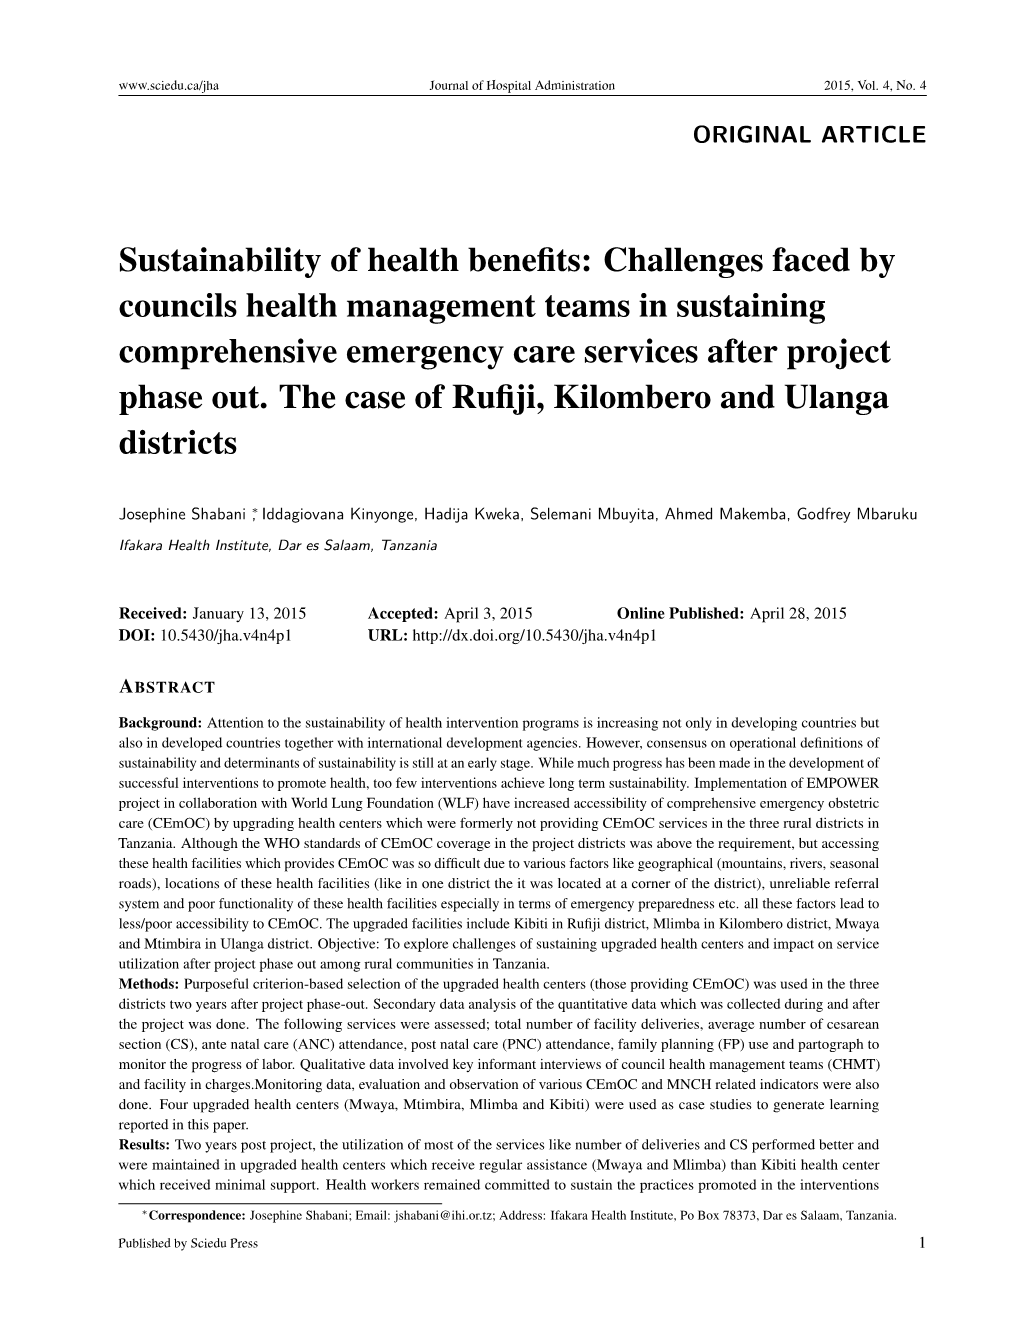 Sustainability of Health Benefits